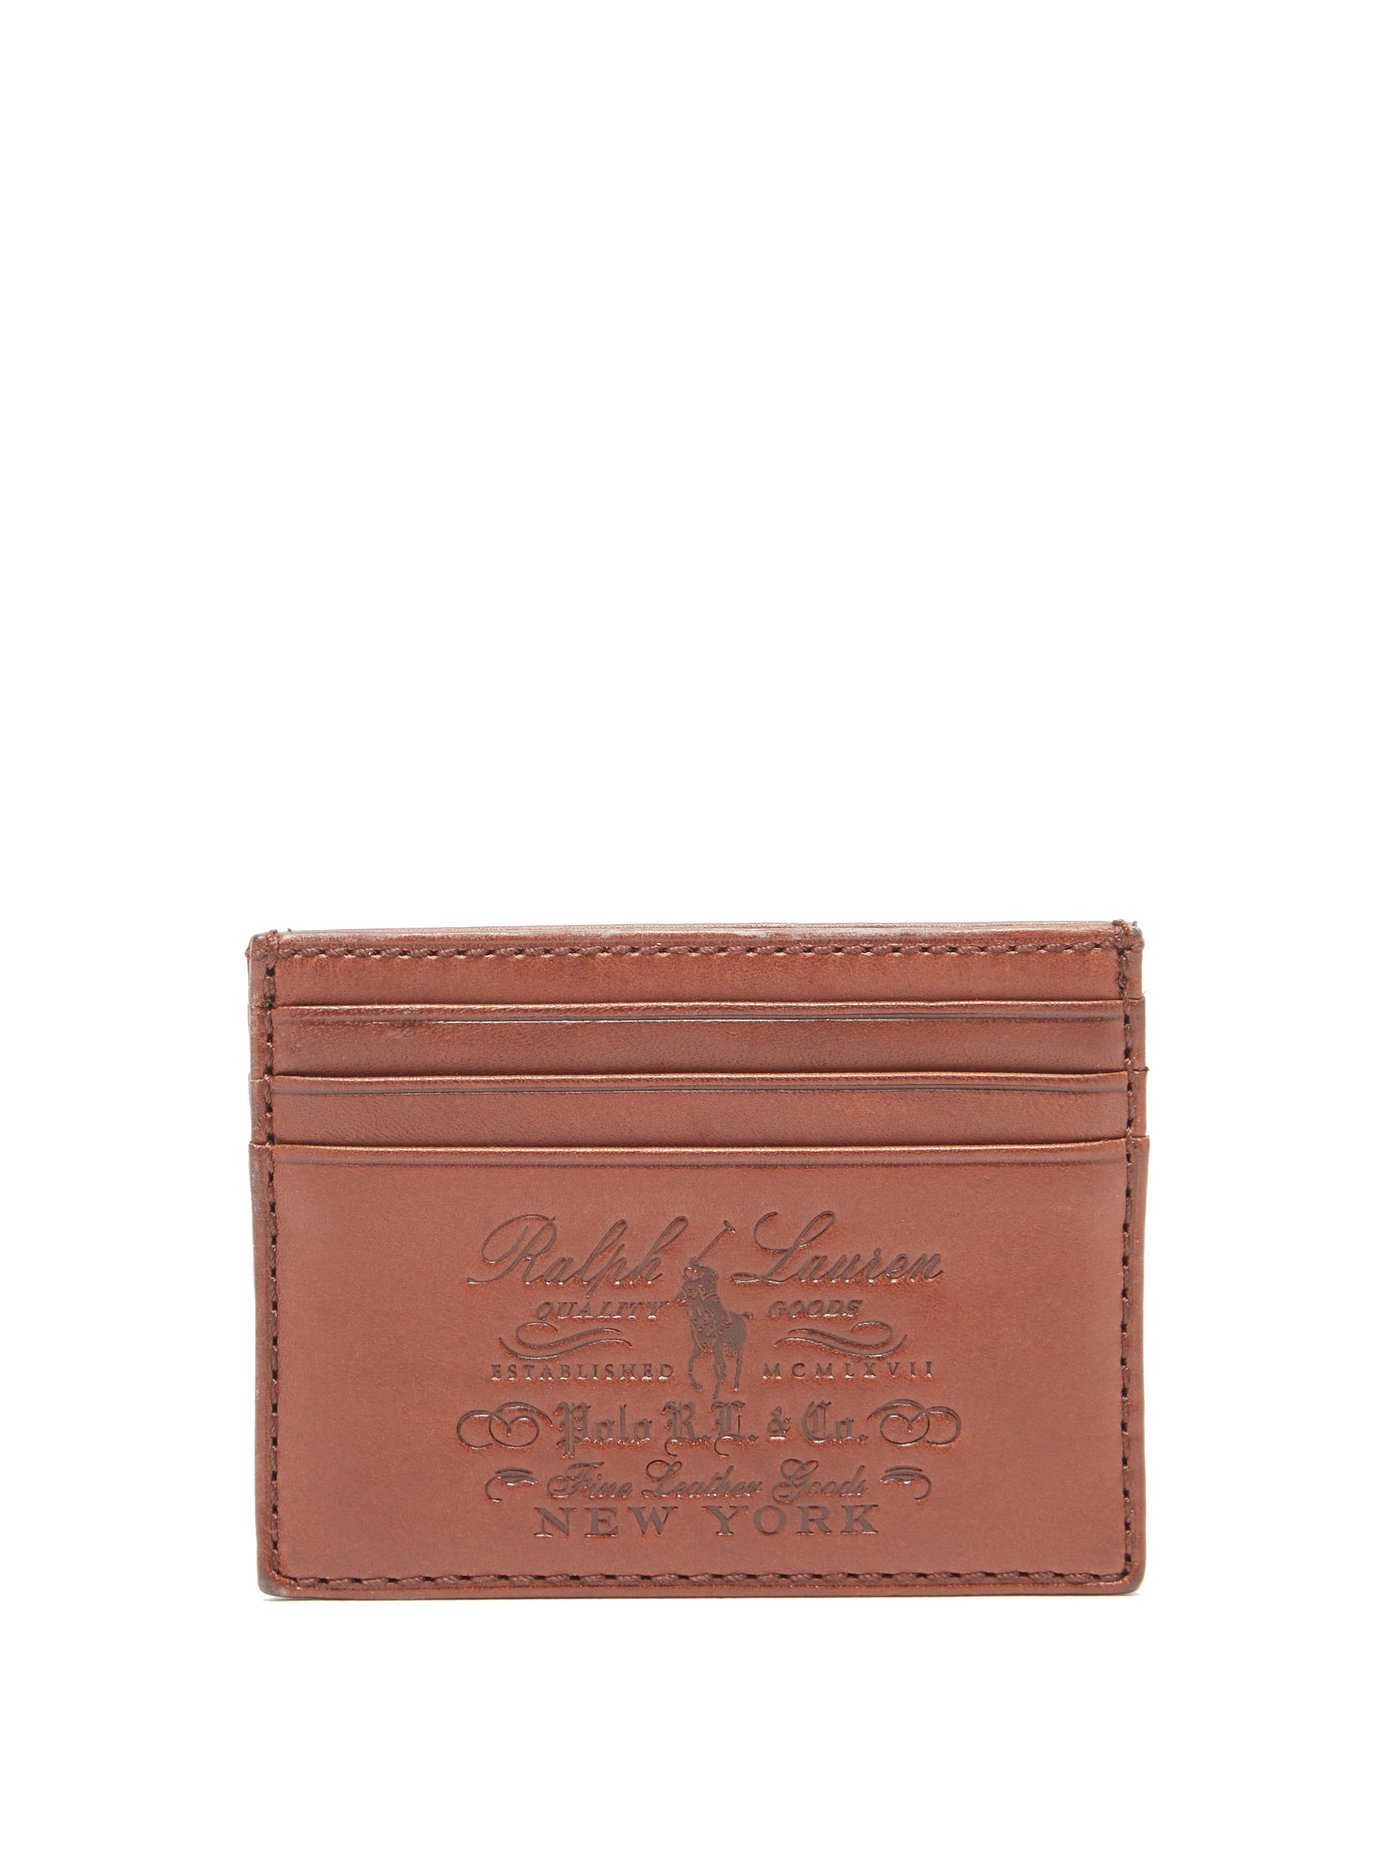 ralph lauren leather card holder